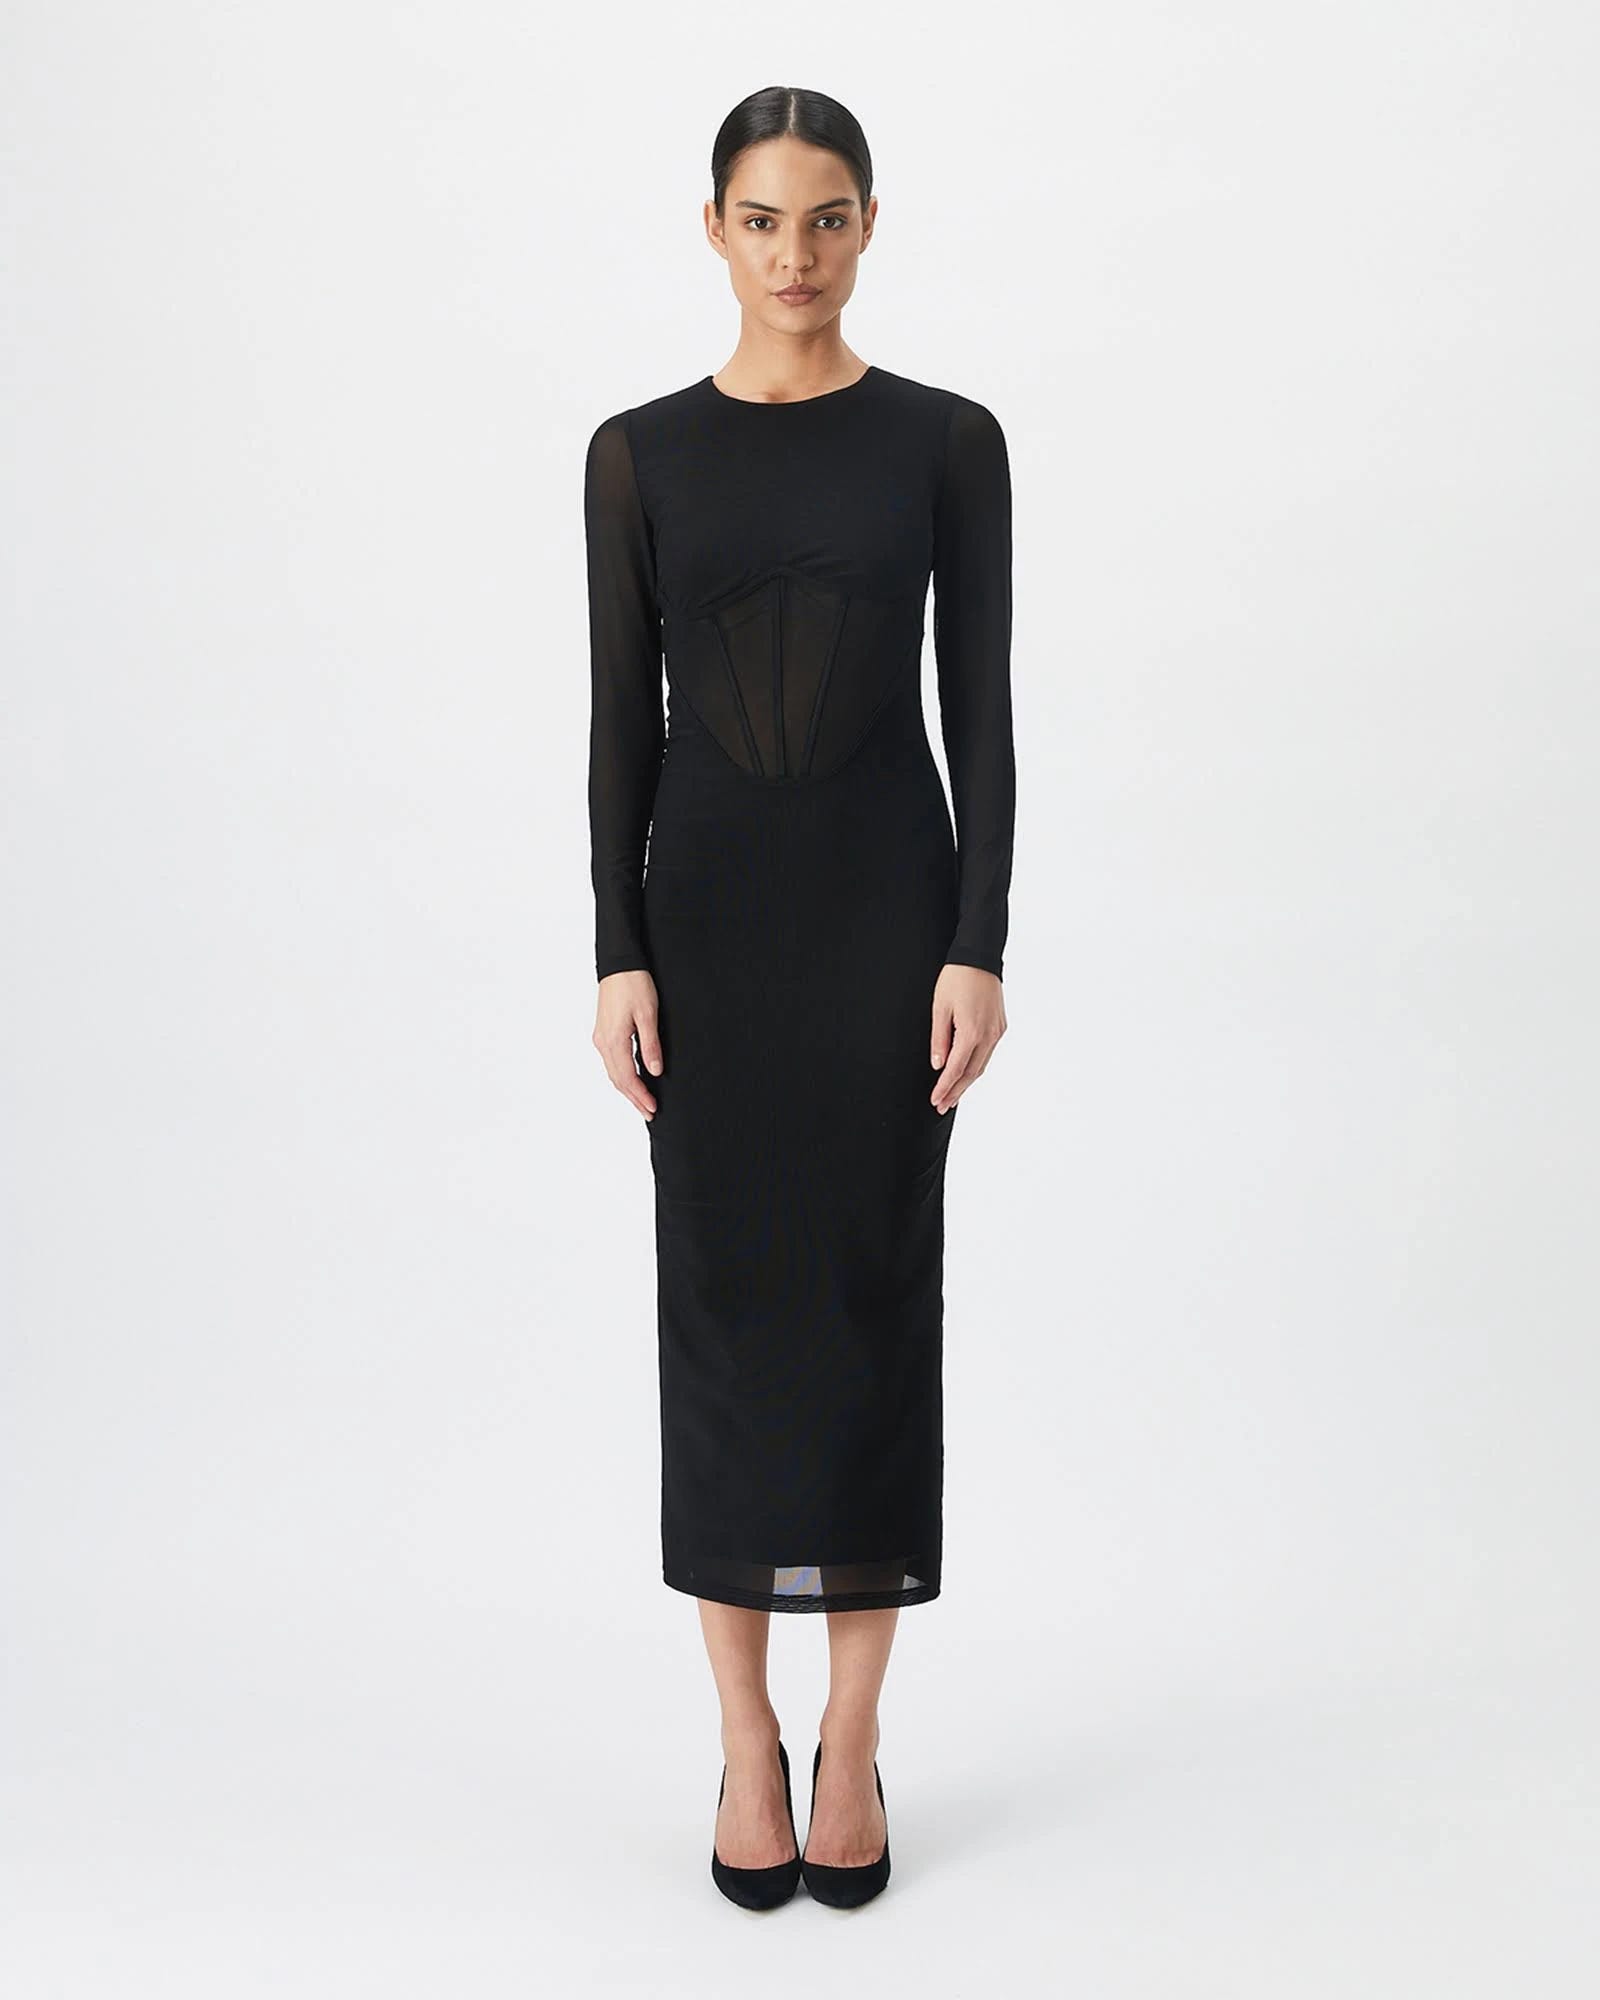 Black Corset Long Sleeve Midi Dress: Flattering and Versatile Style | Image